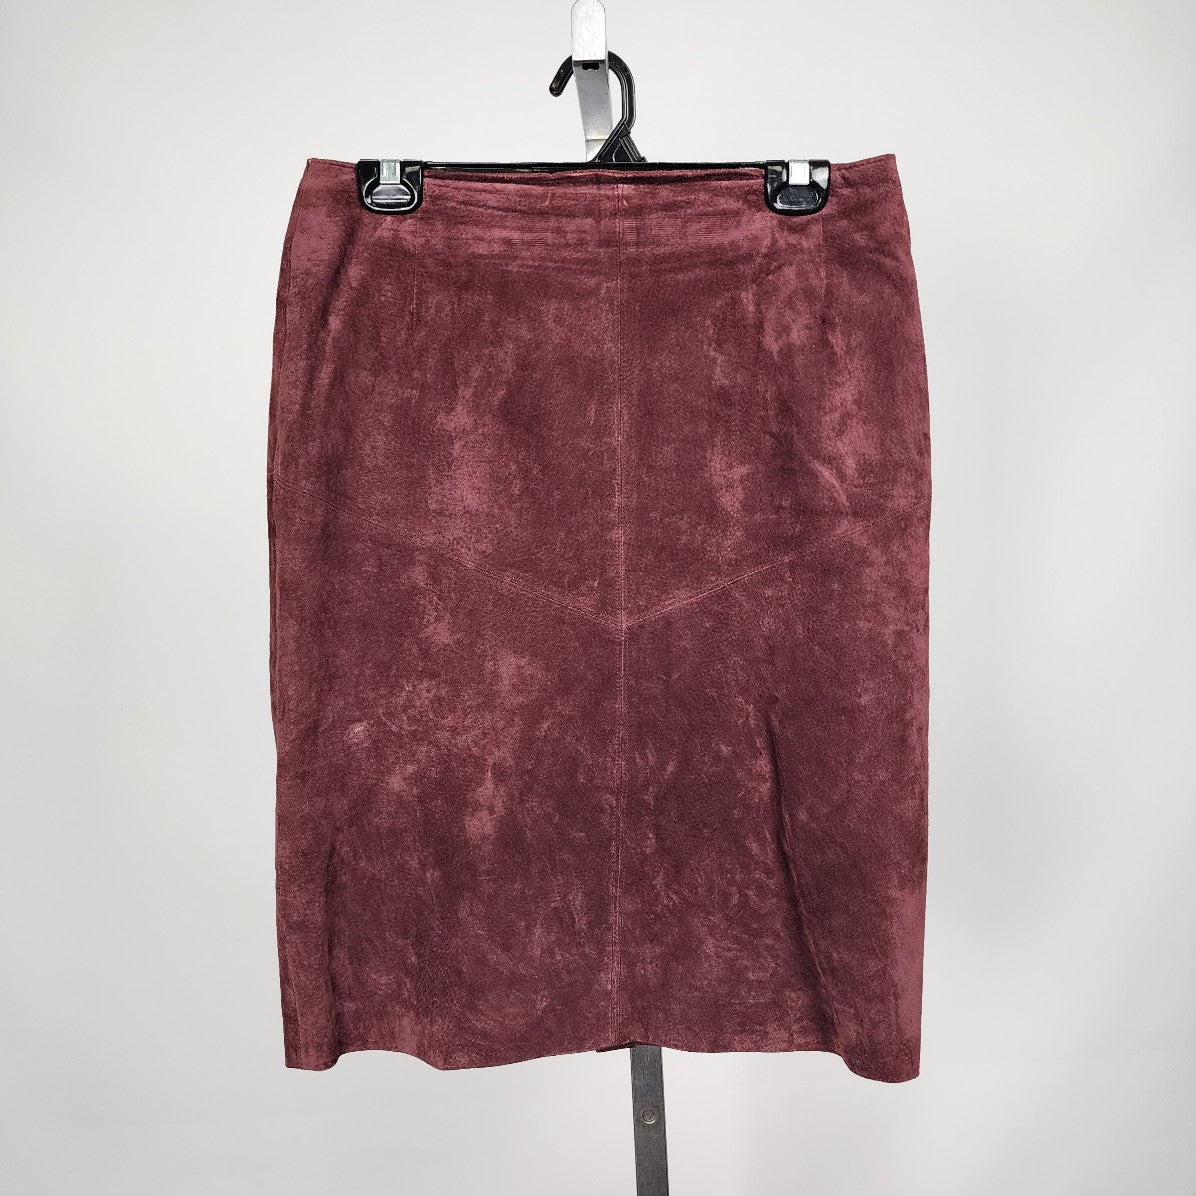 Vintage Victoria Leather Burgundy Suede Skirt Size M